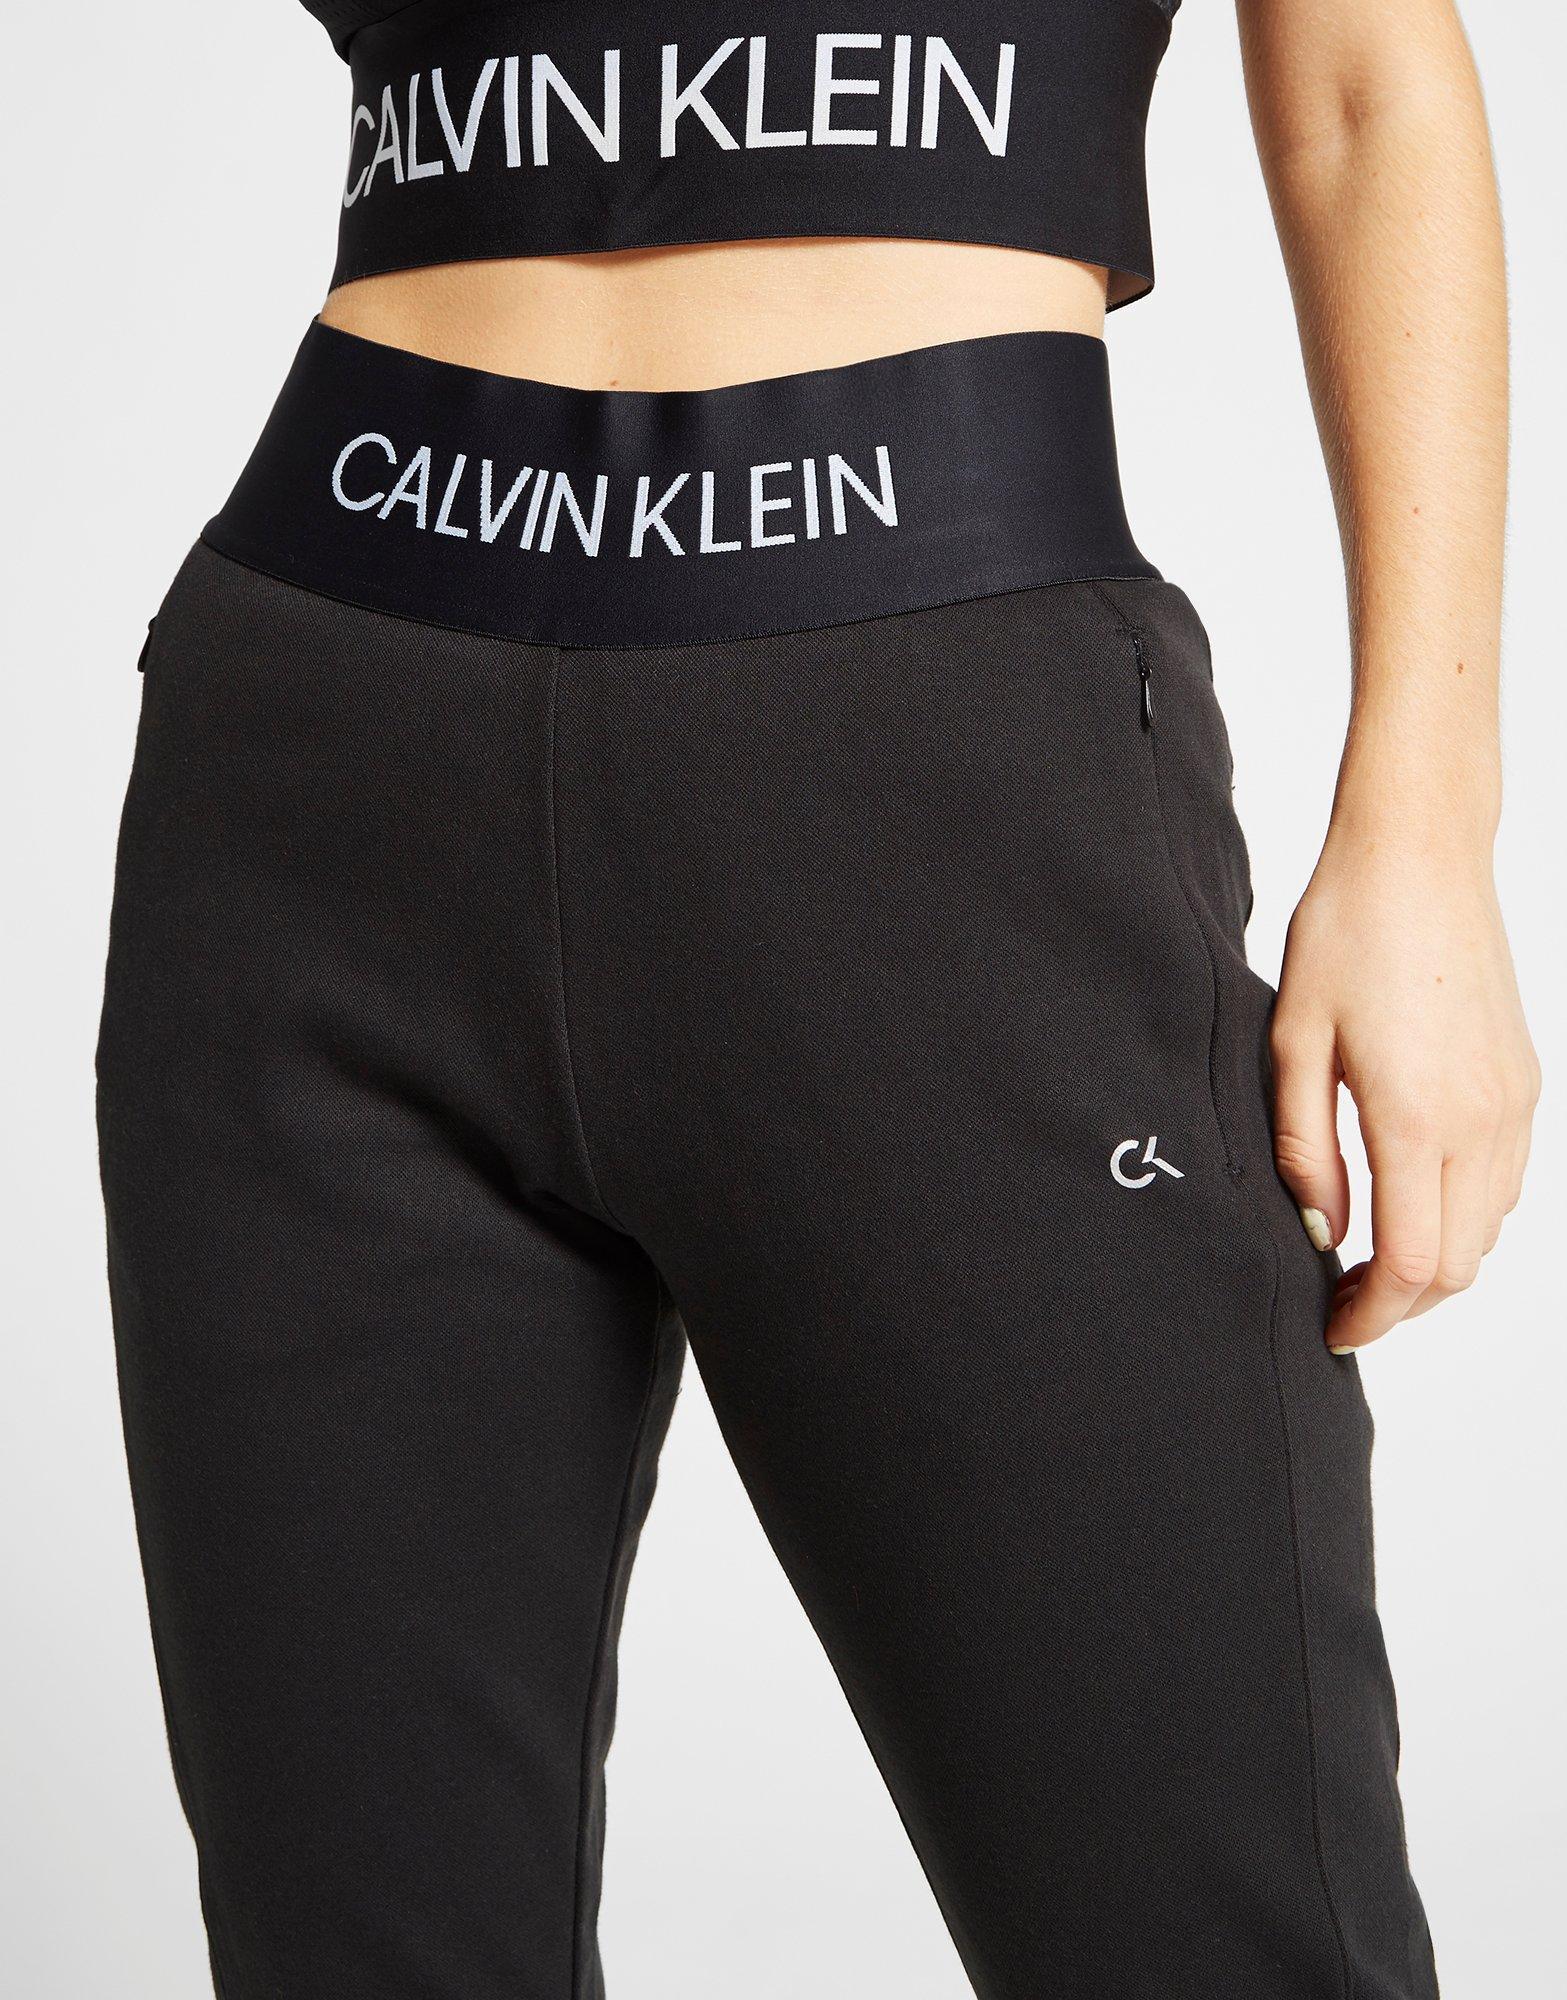 Calvin Klein Active Pants Flash Sales, SAVE 58%.